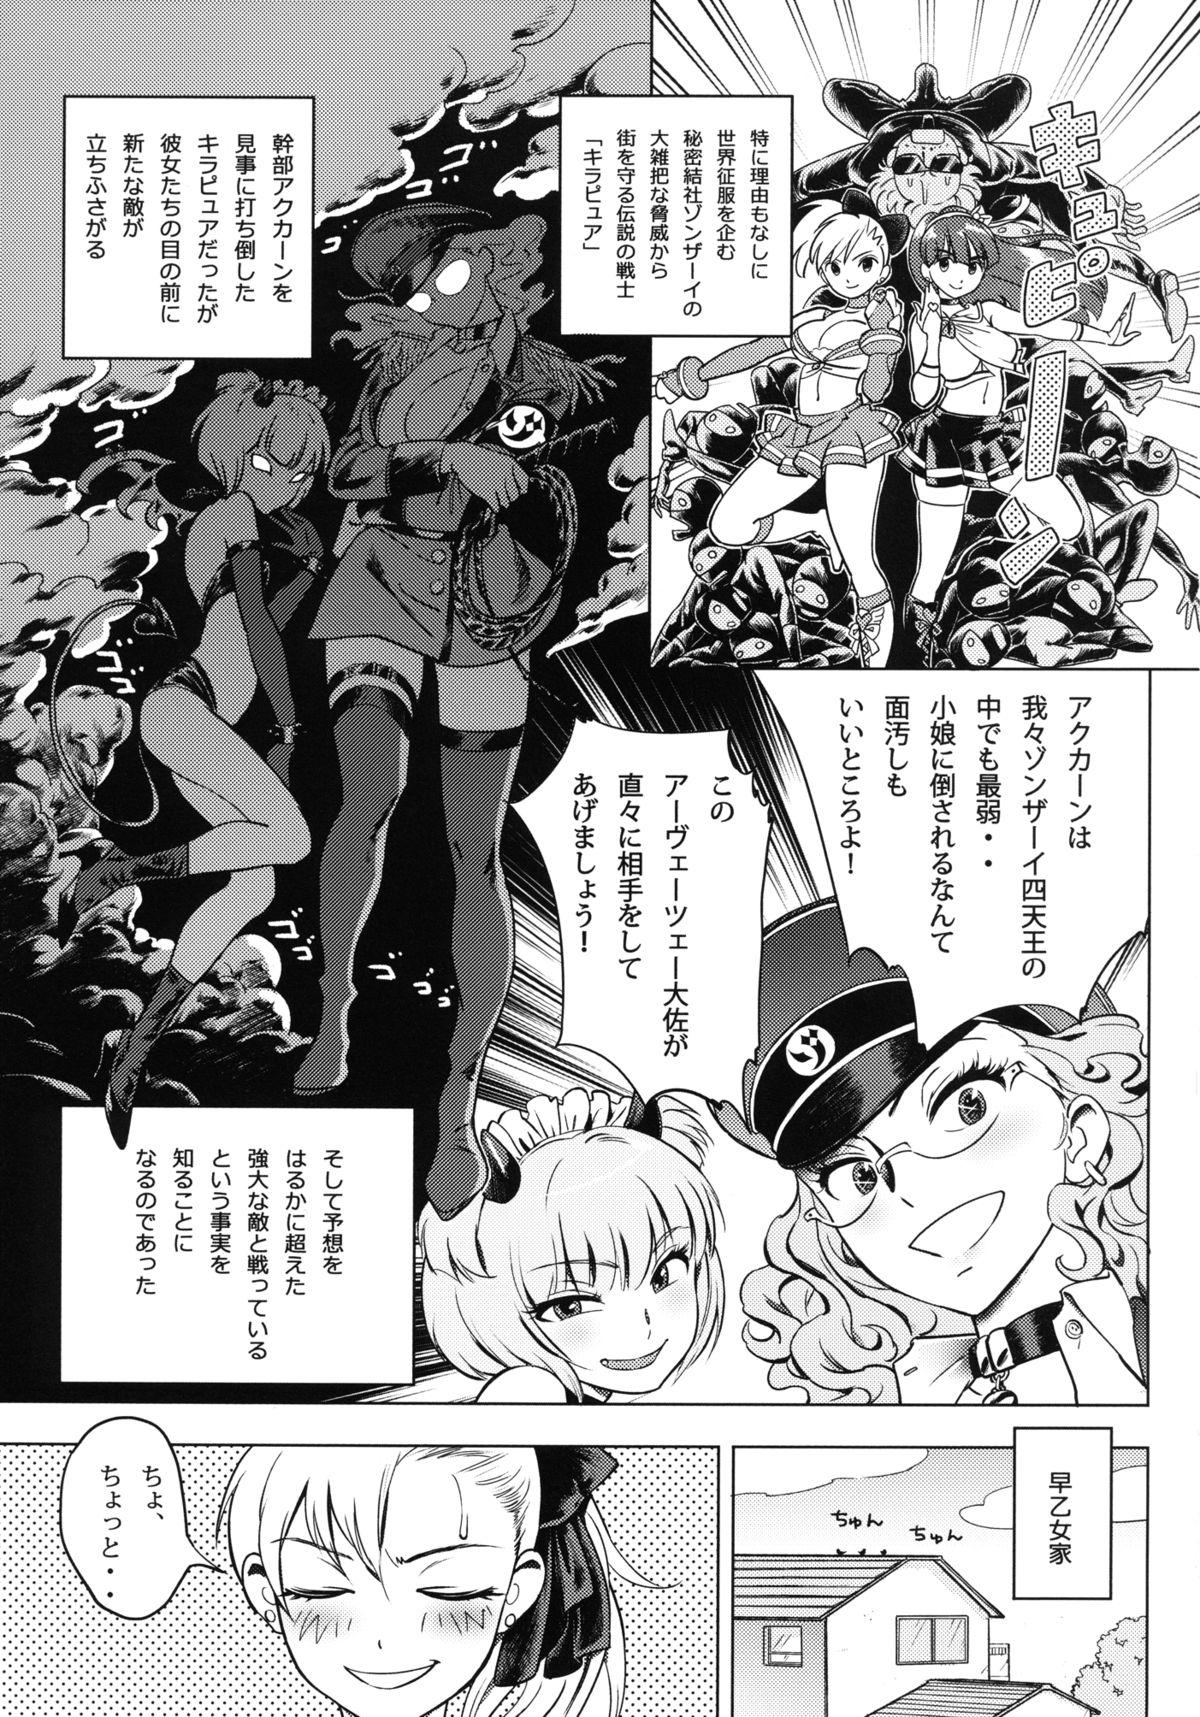 Camgirl Futari wa SEXUAL HEROINE Max Heat! Publico - Page 2